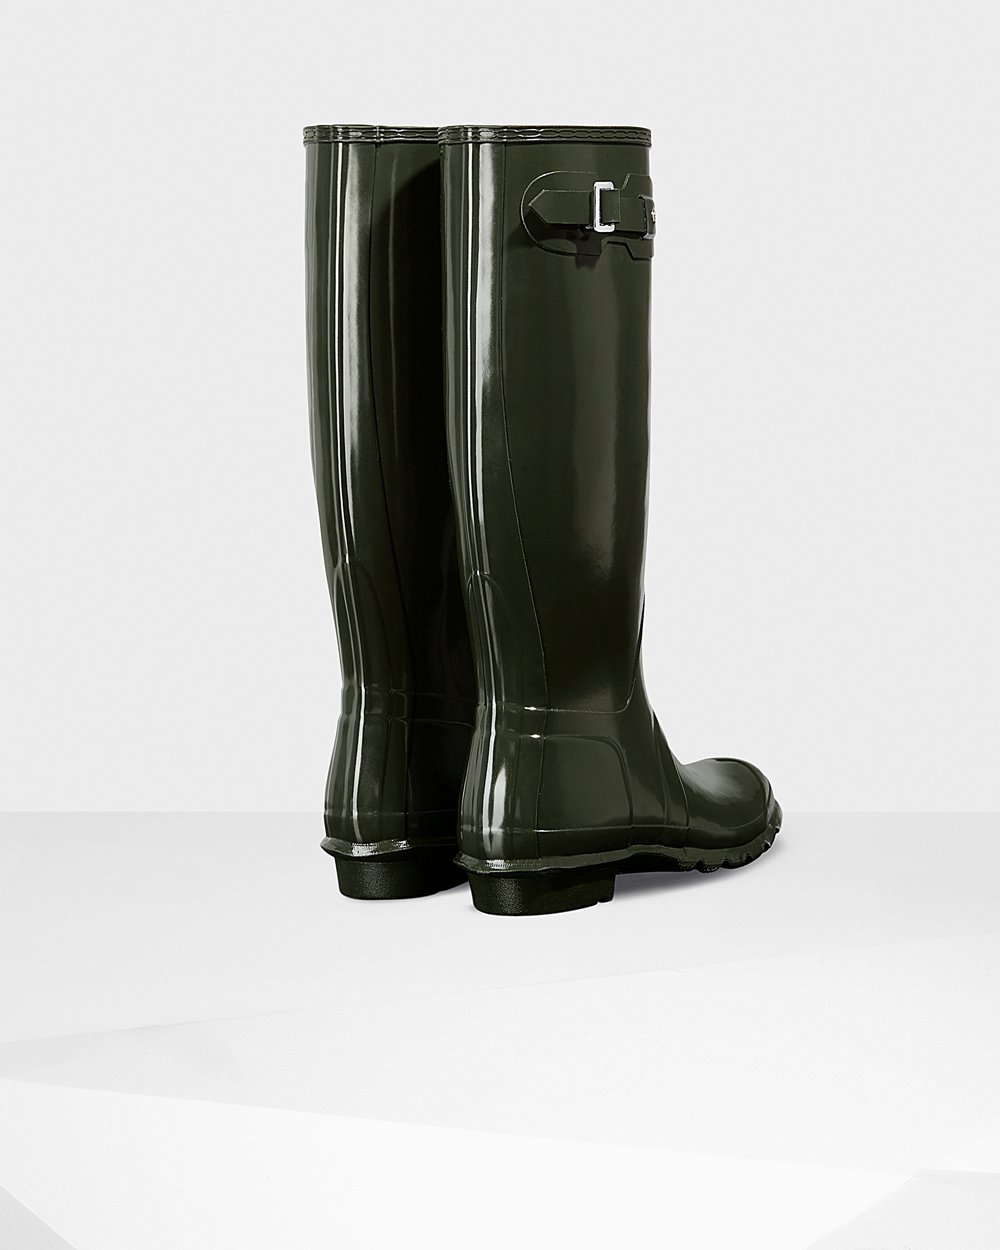 Womens Tall Rain Boots - Hunter Original Gloss (26XHEPRBF) - Dark Olive